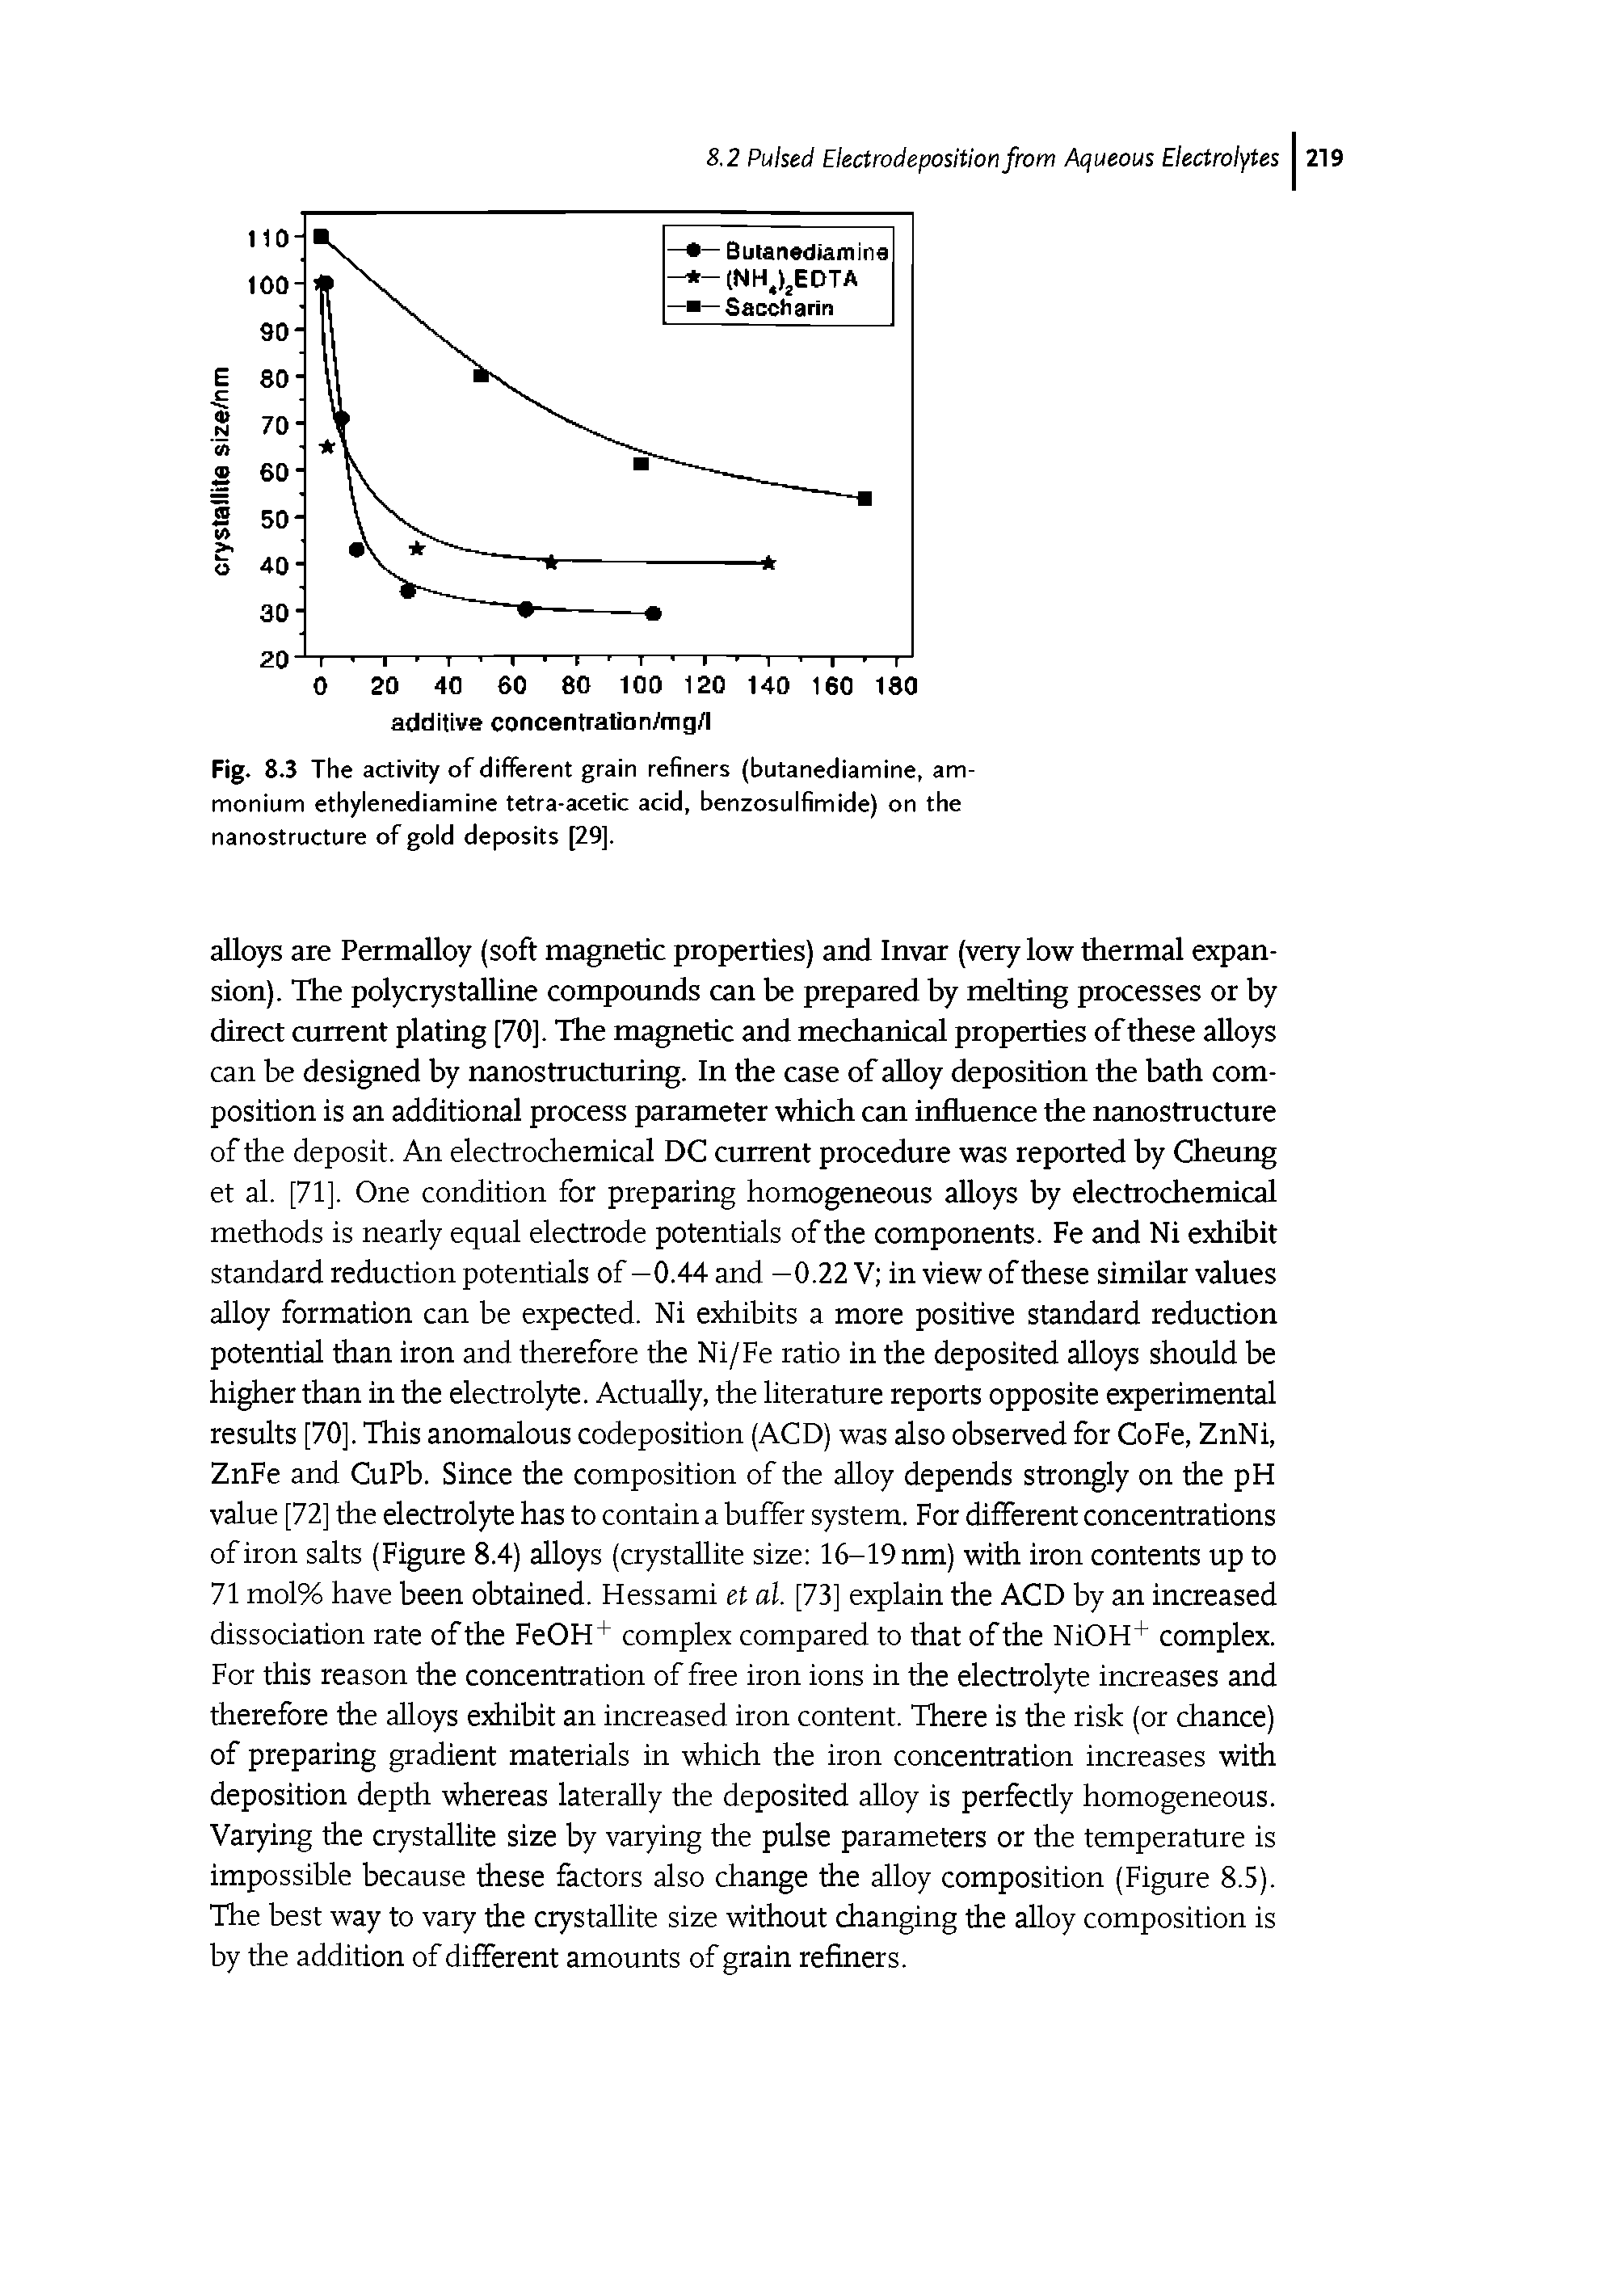 Fig. 8.3 The activity of different grain refiners (butanediamine, ammonium ethylenediamine tetra-acetic acid, benzosulfimide) on the nanostructure of gold deposits [29].